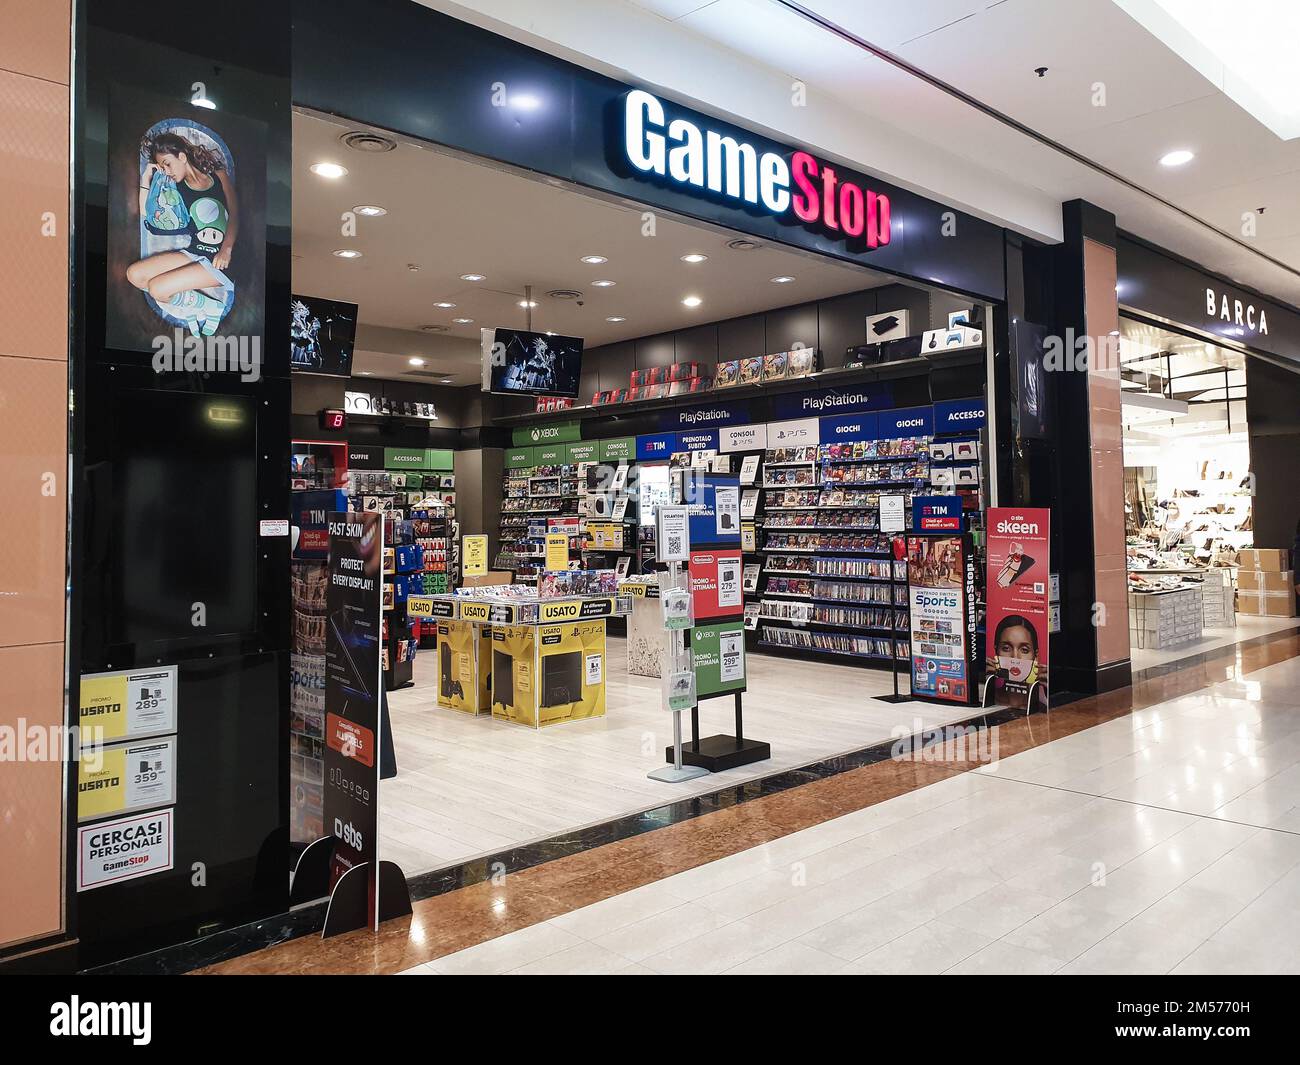 Bergamo, Italy - April 29, 2022: GameStop video game store in shopping center. Stock Photo